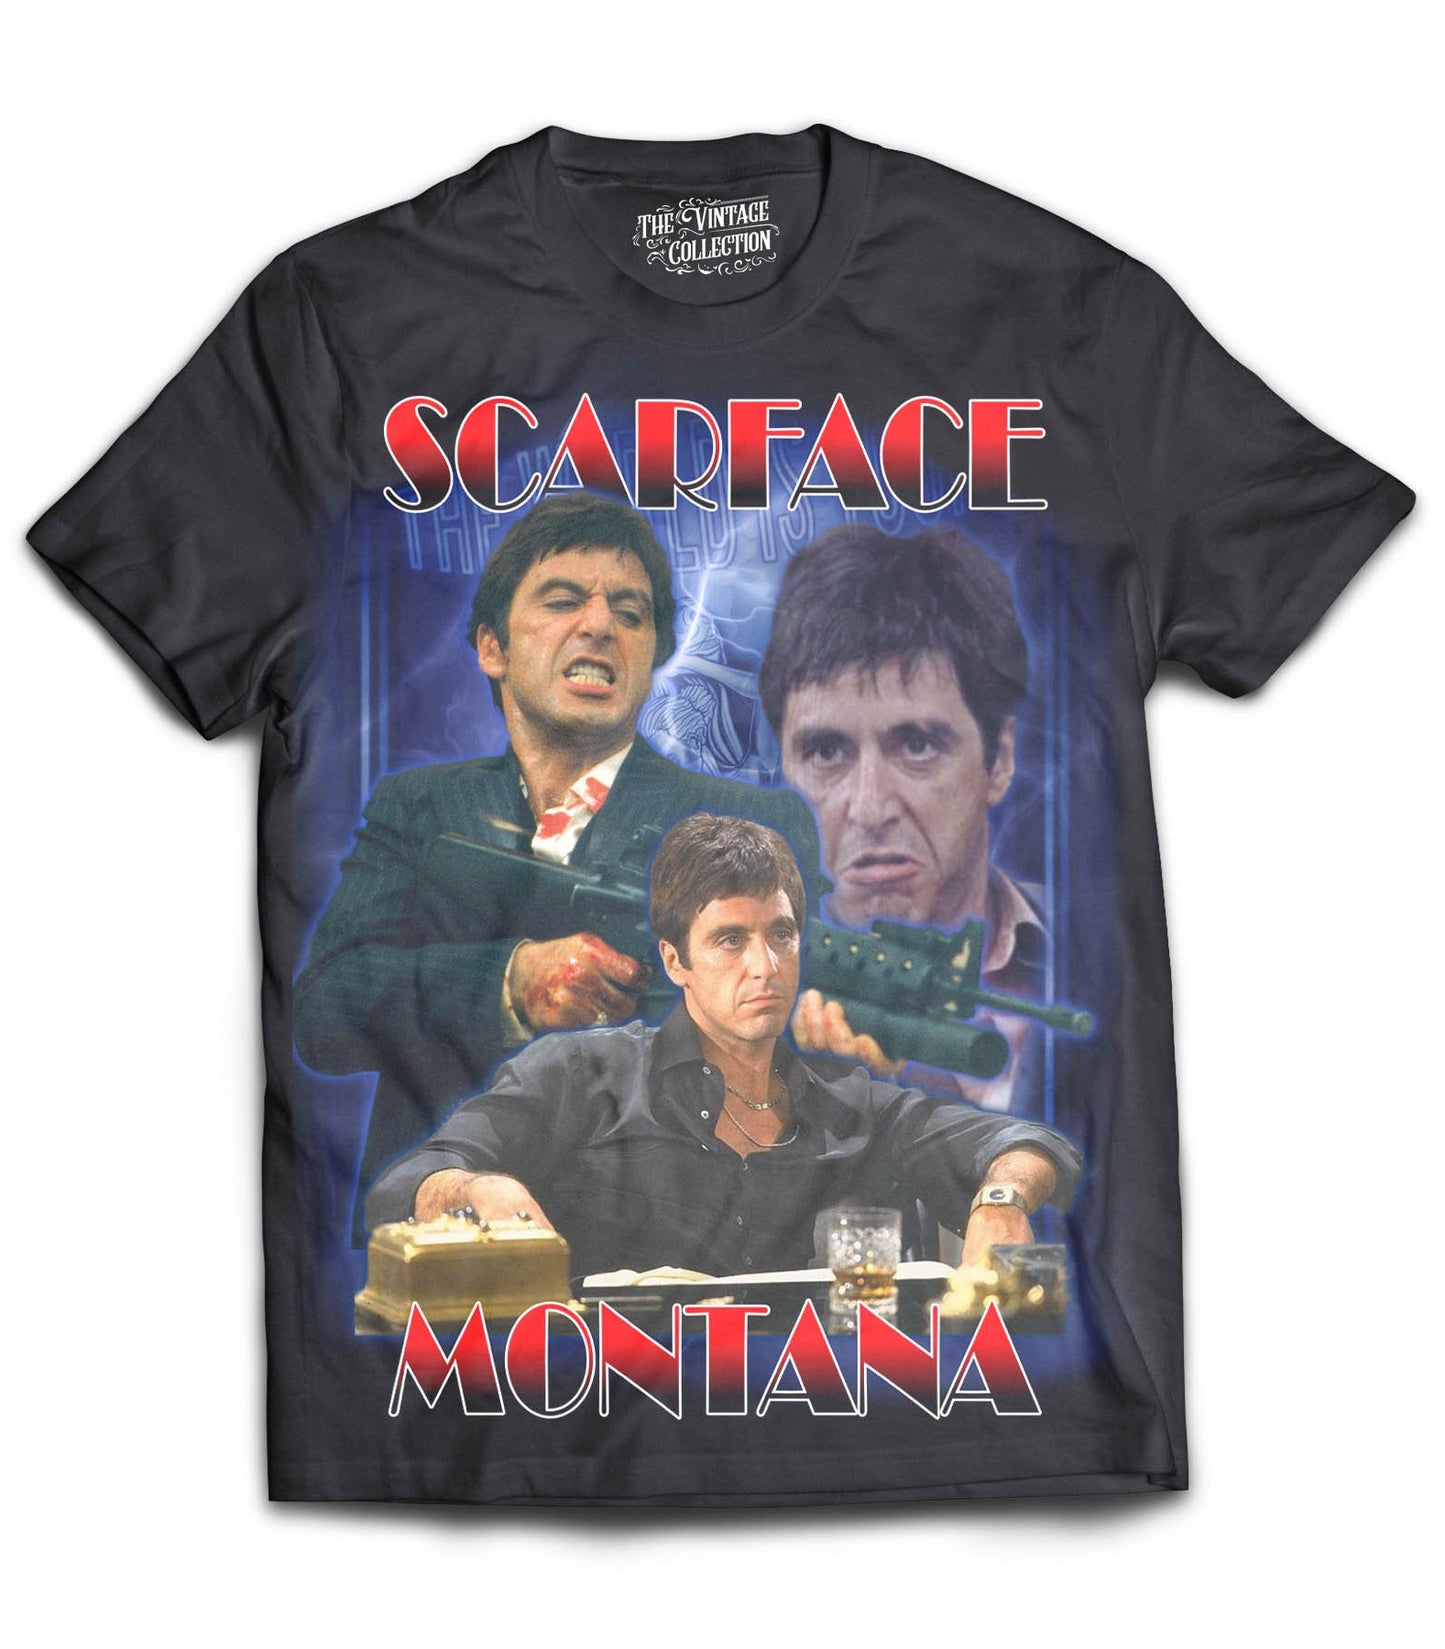 Scarface Montana Tribute Shirt (Black)